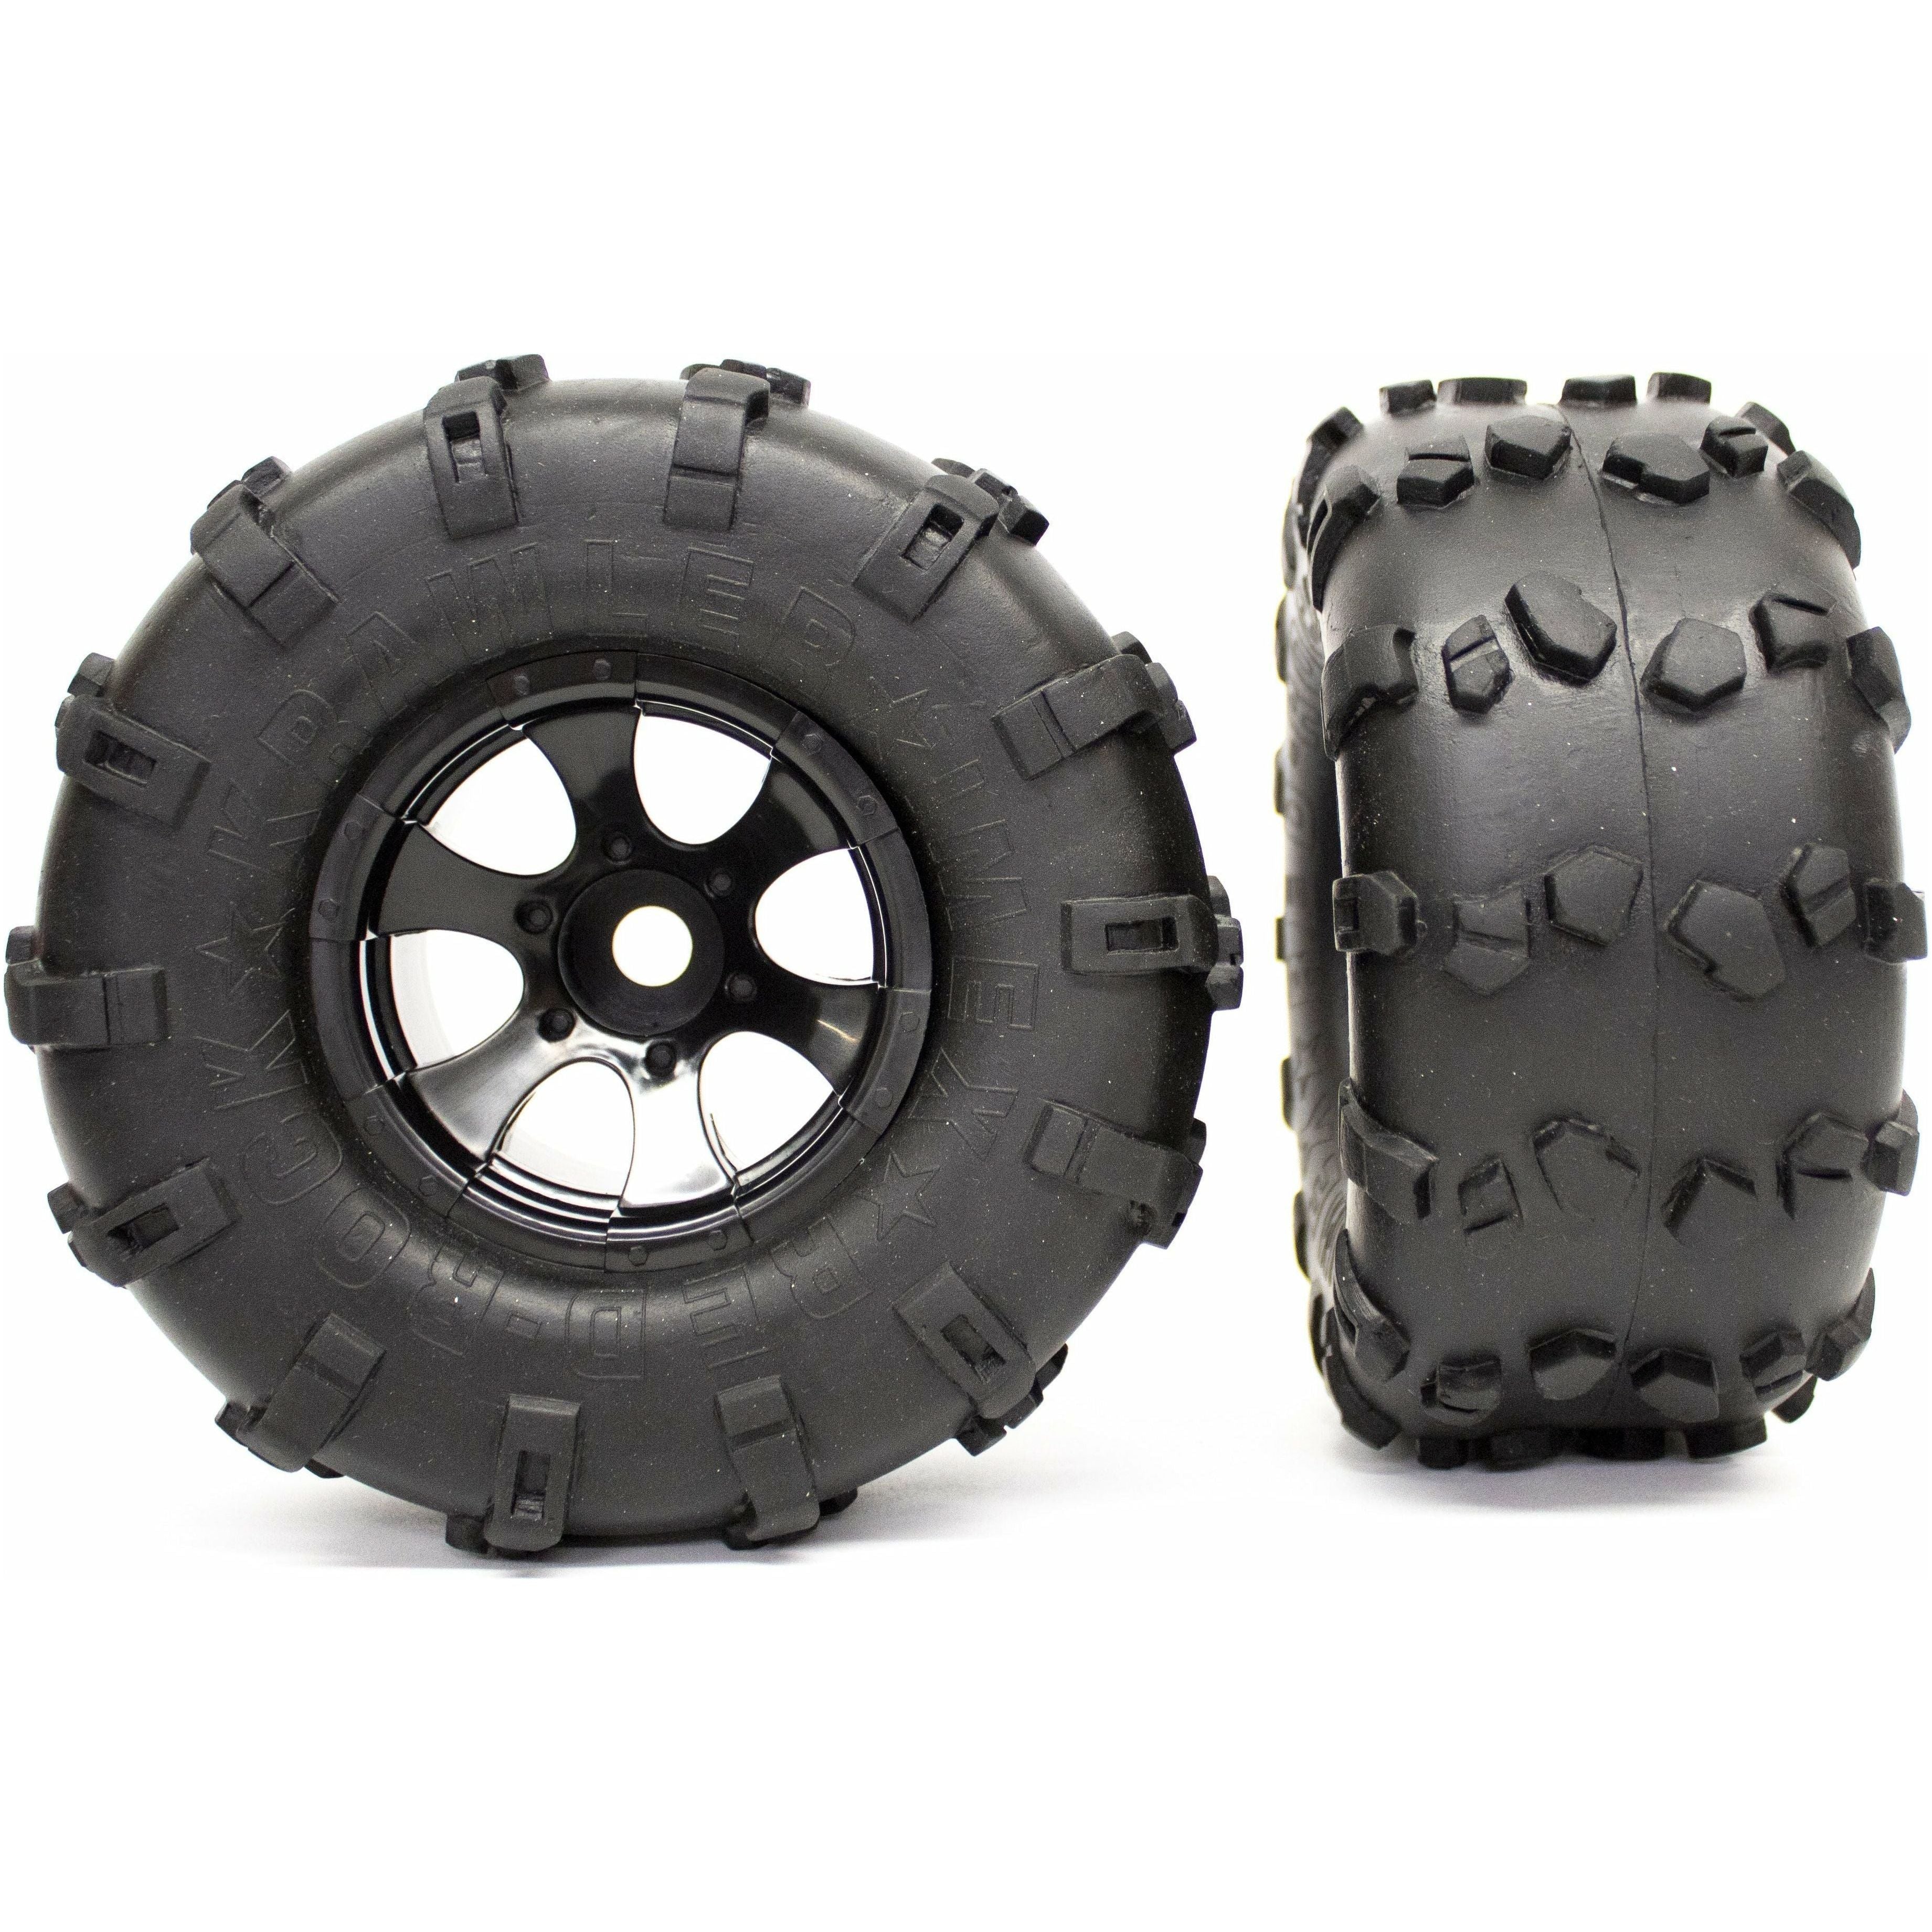 Red Rock Tires & Eagle Rims (1 Pair) (Choose Color)